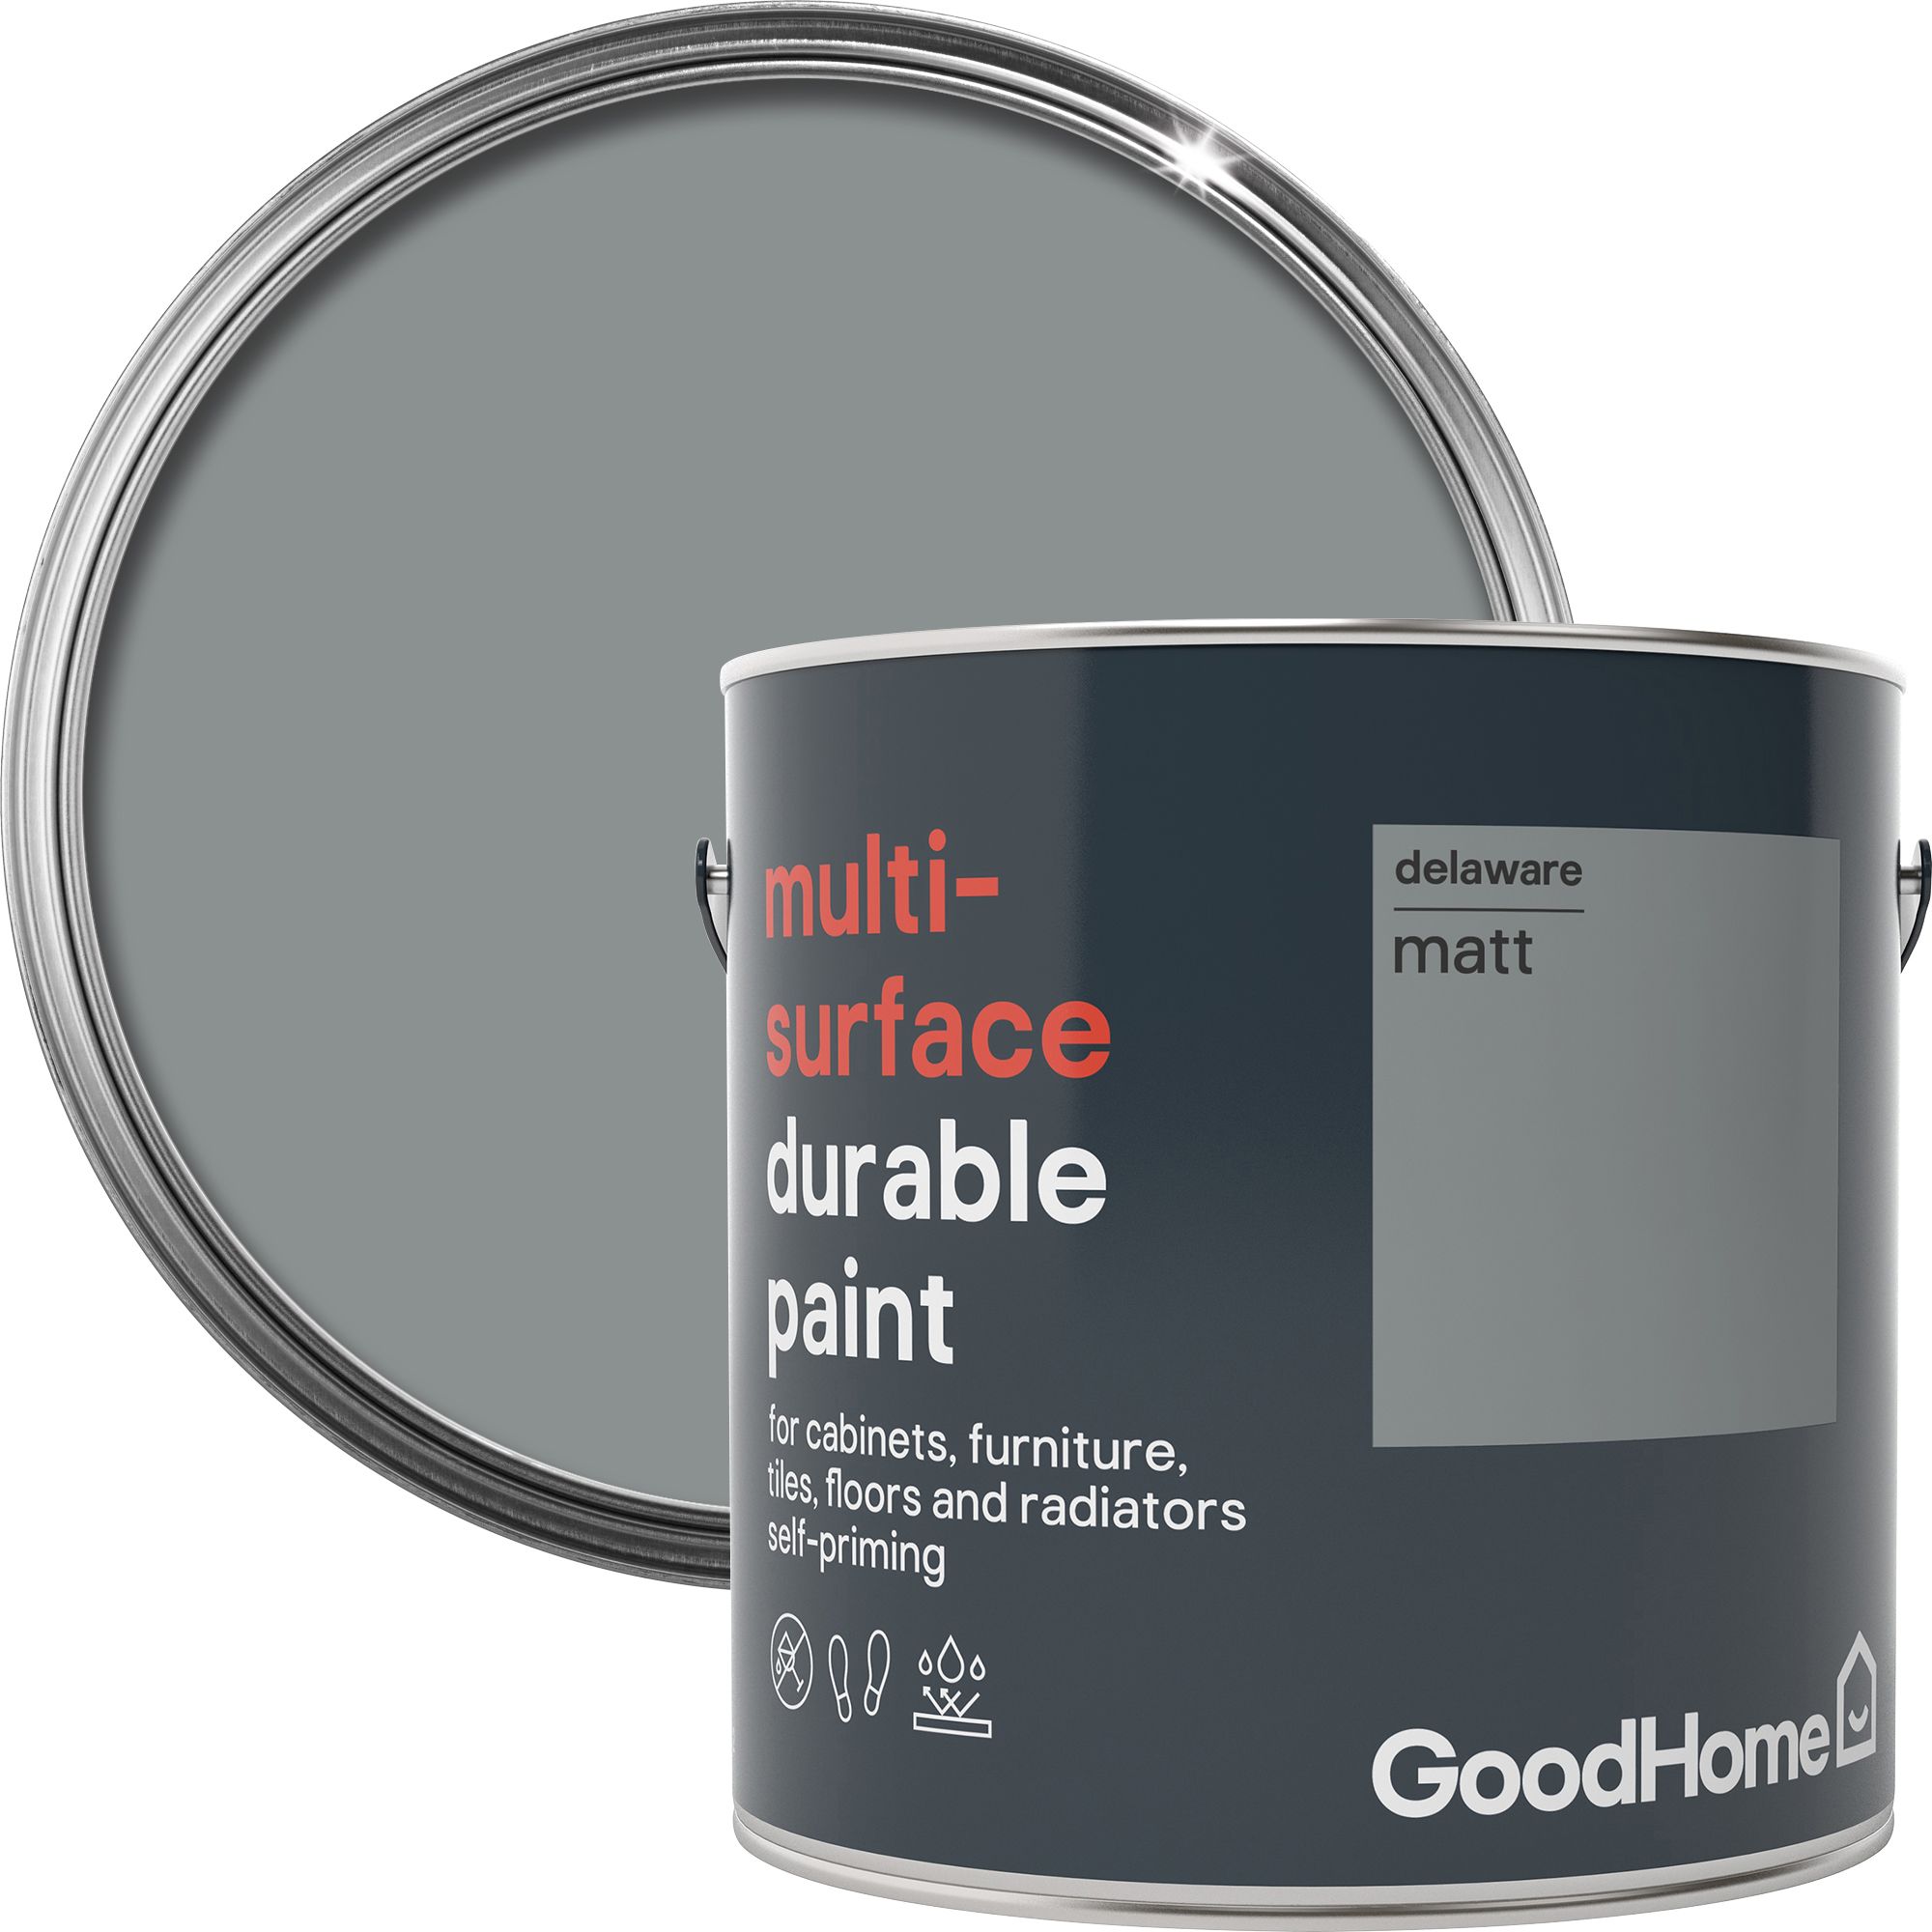 Goodhome Durable Delaware Matt Multi Surface Paint 2l